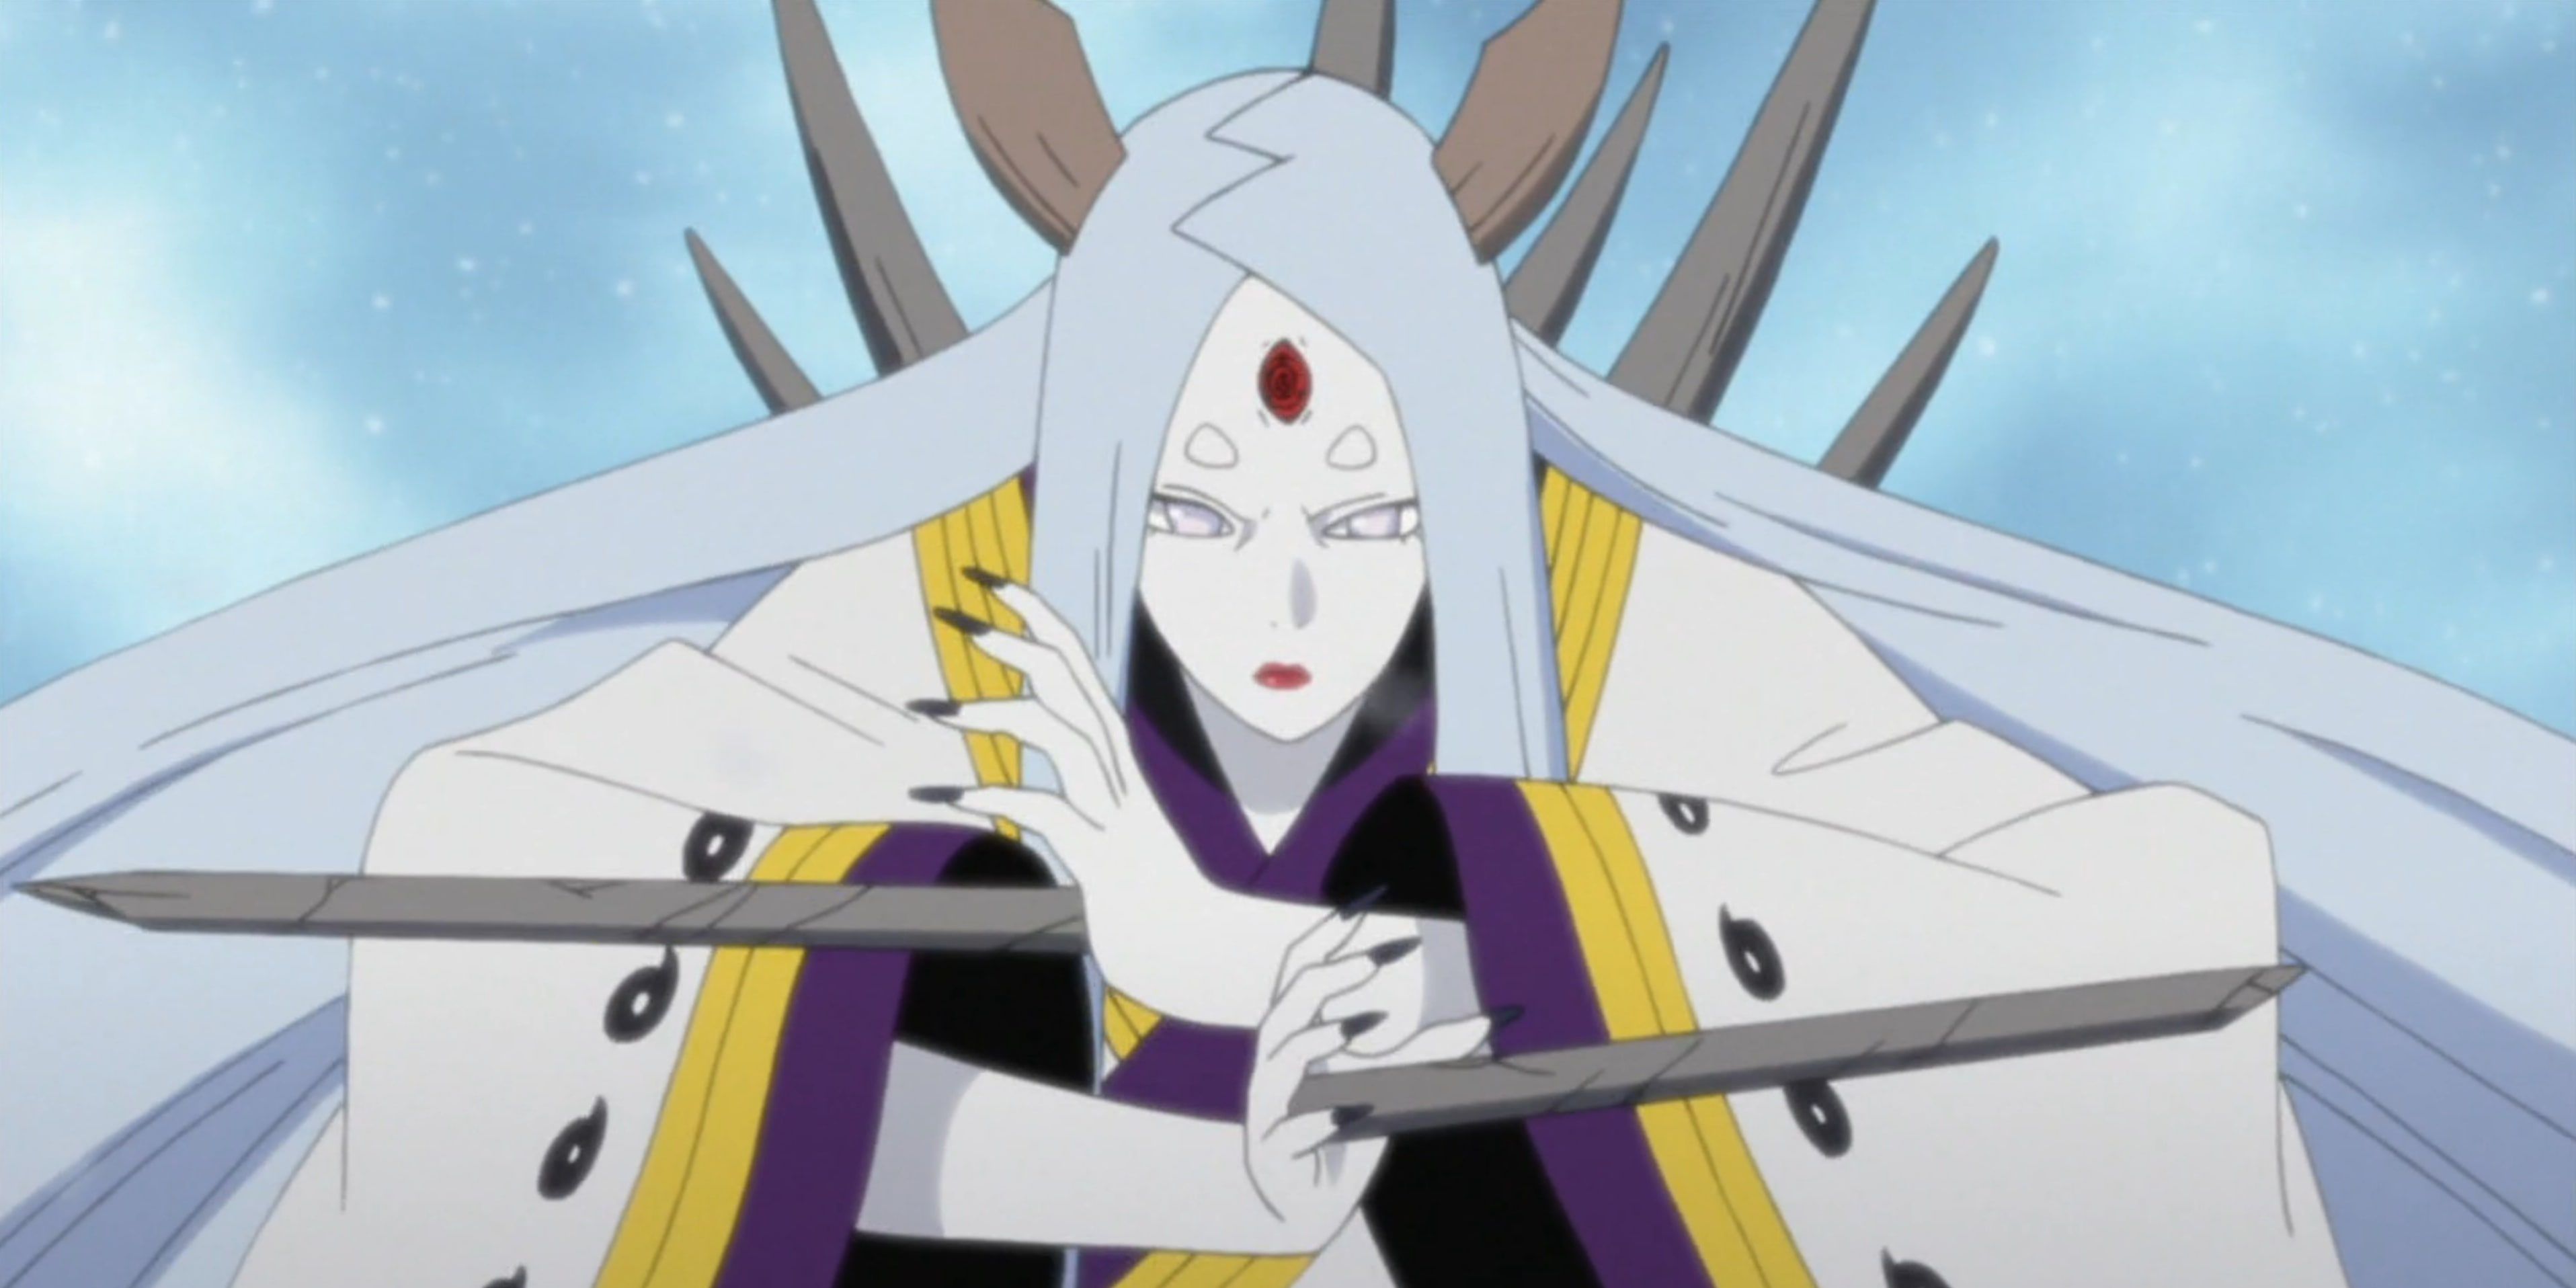 Kaguya using the All-Killing Ash Bones in the Naruto franchise